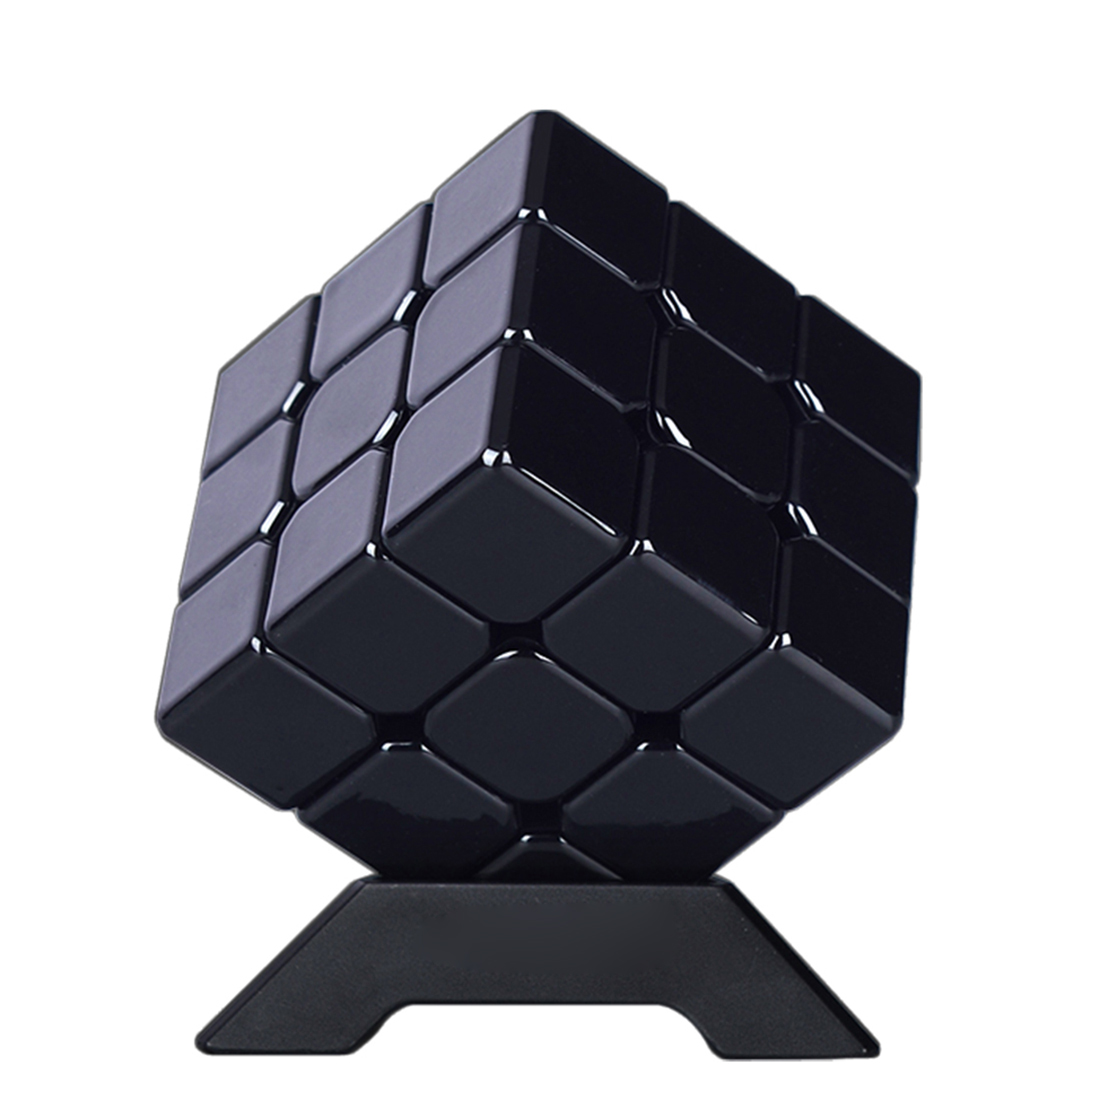 ALLAMWAR 3x3 Cylinder Speed Cube 3x3x3 Stickerless Puzzle Magic